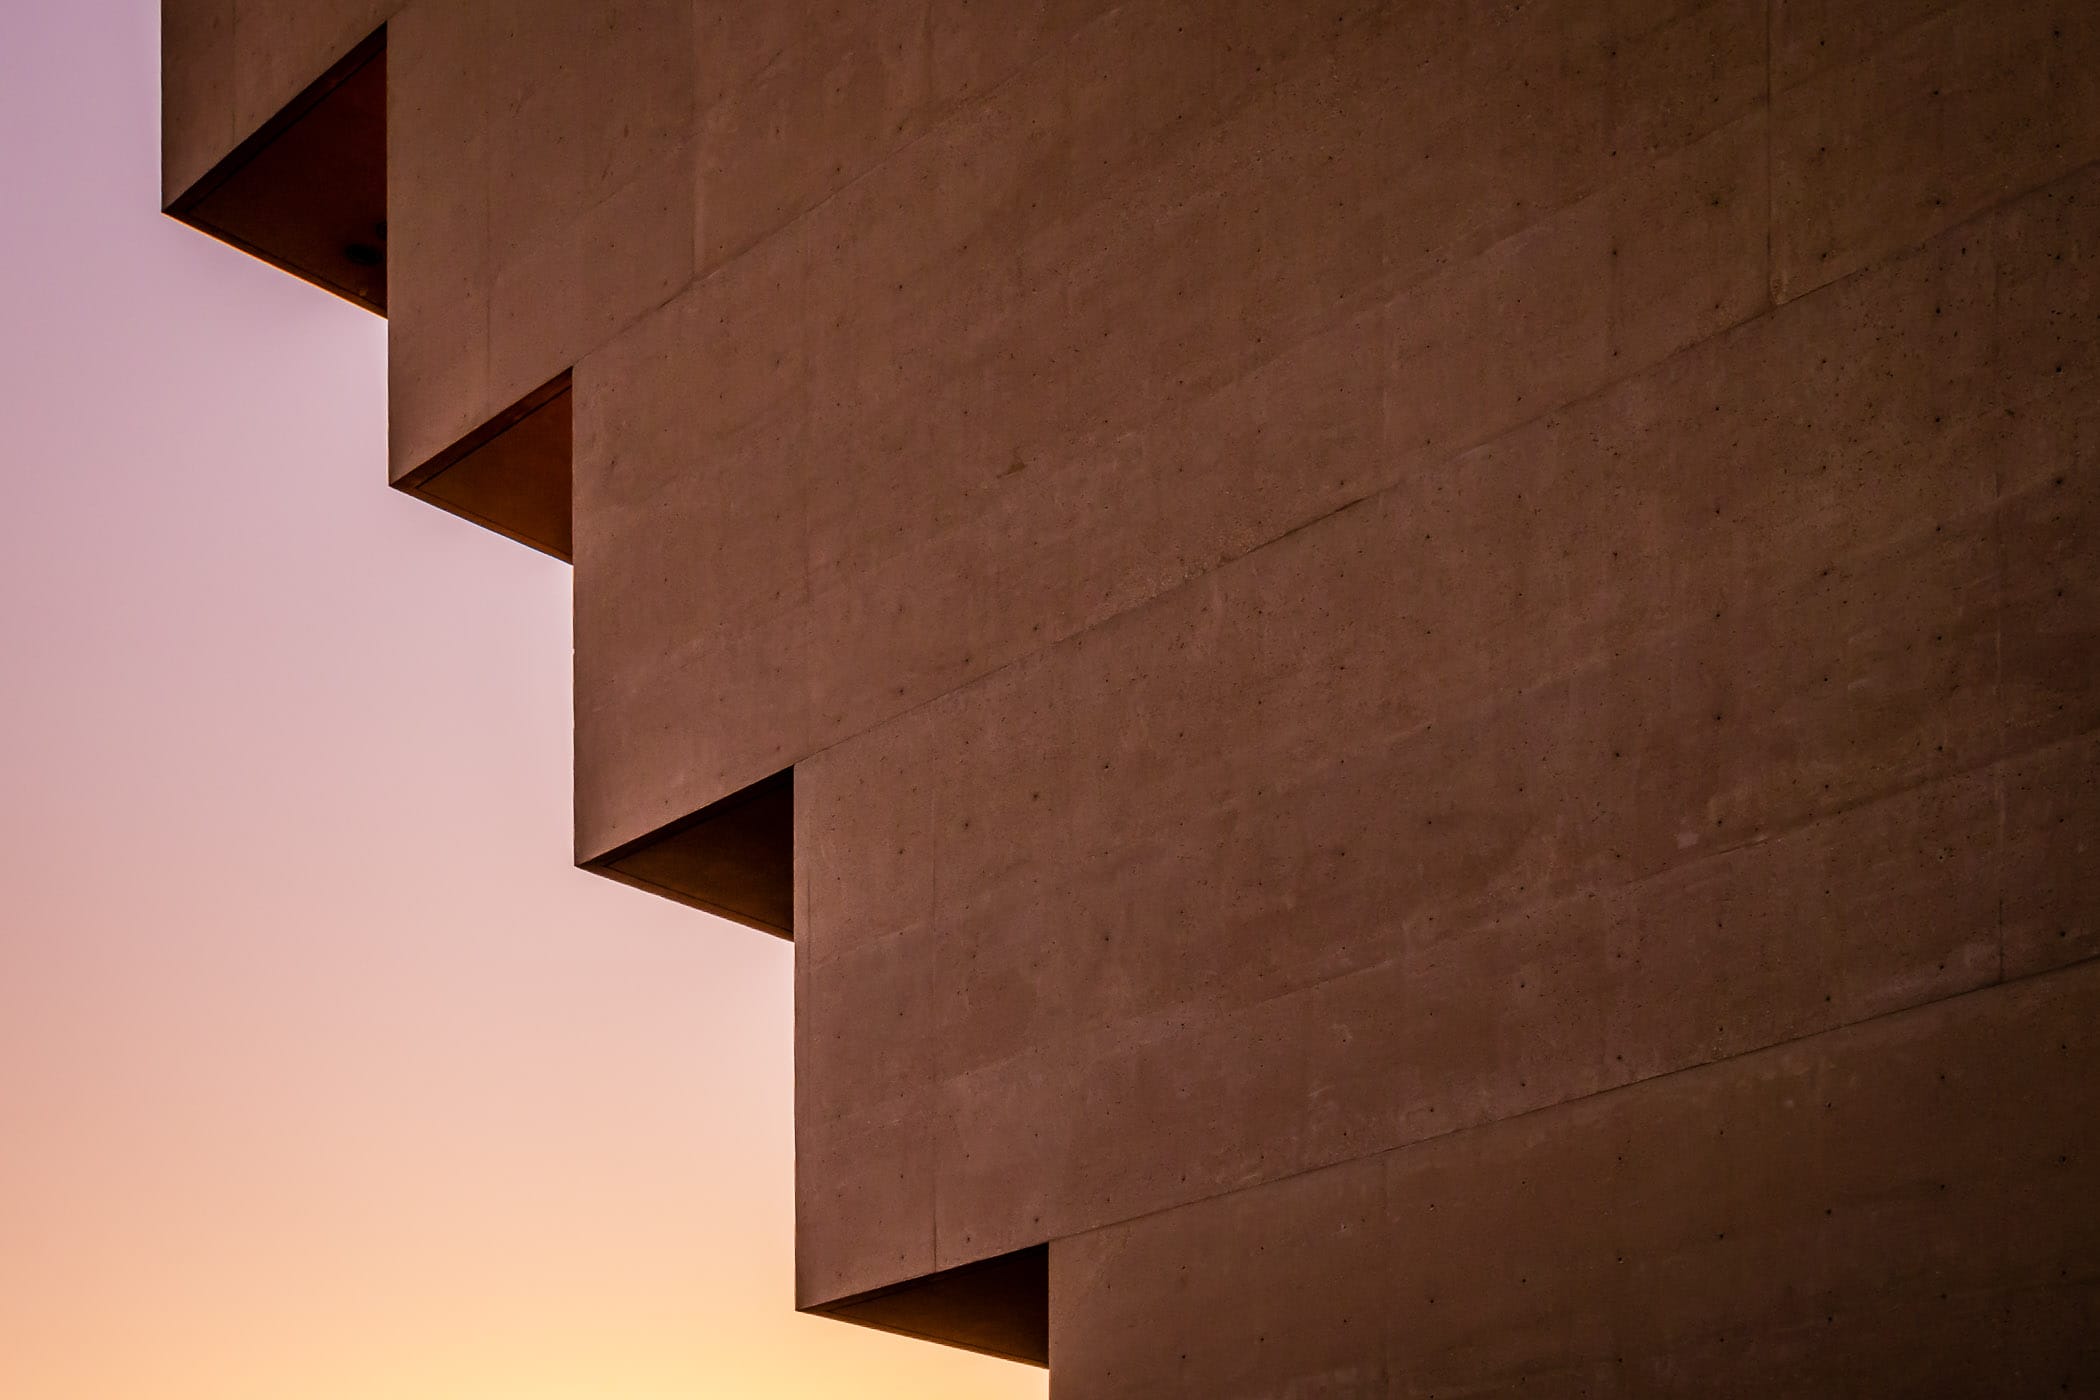 The late-evening sun illuminates this architectural detail of the I.M. Pei-designed Dallas City Hall.